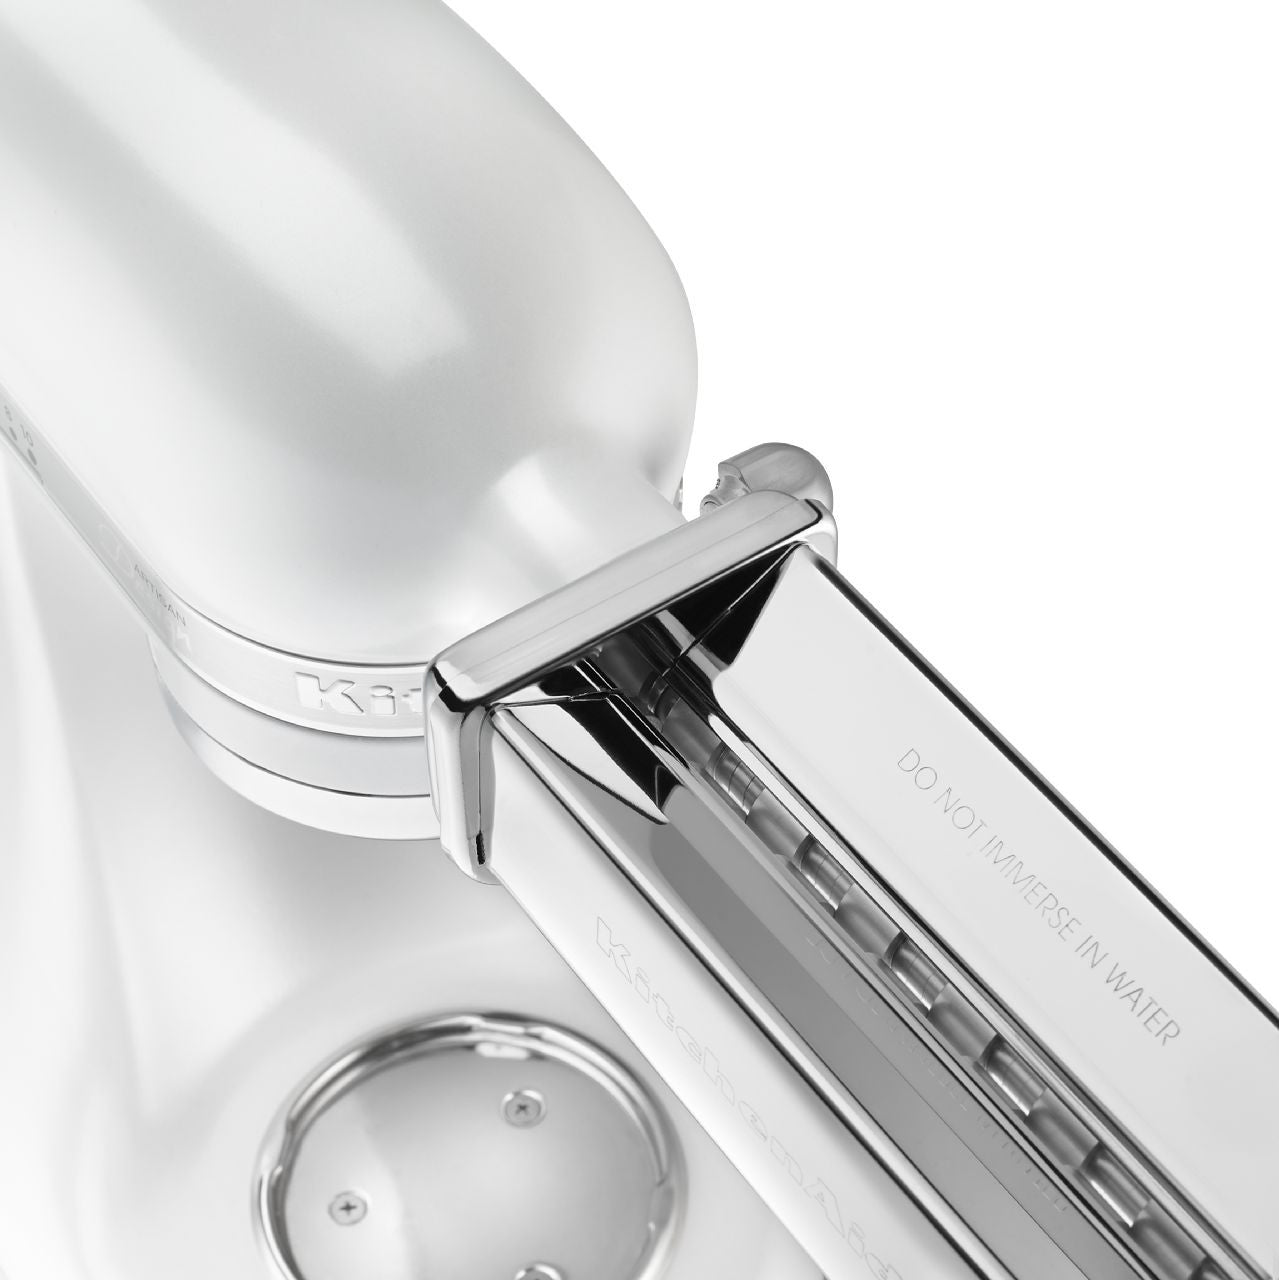 KSM155GBFP Kitchenaid Artisan® Design Series 5 Quart Tilt-Head Stand Mixer  with Glass Bowl - Frosted Pearl White